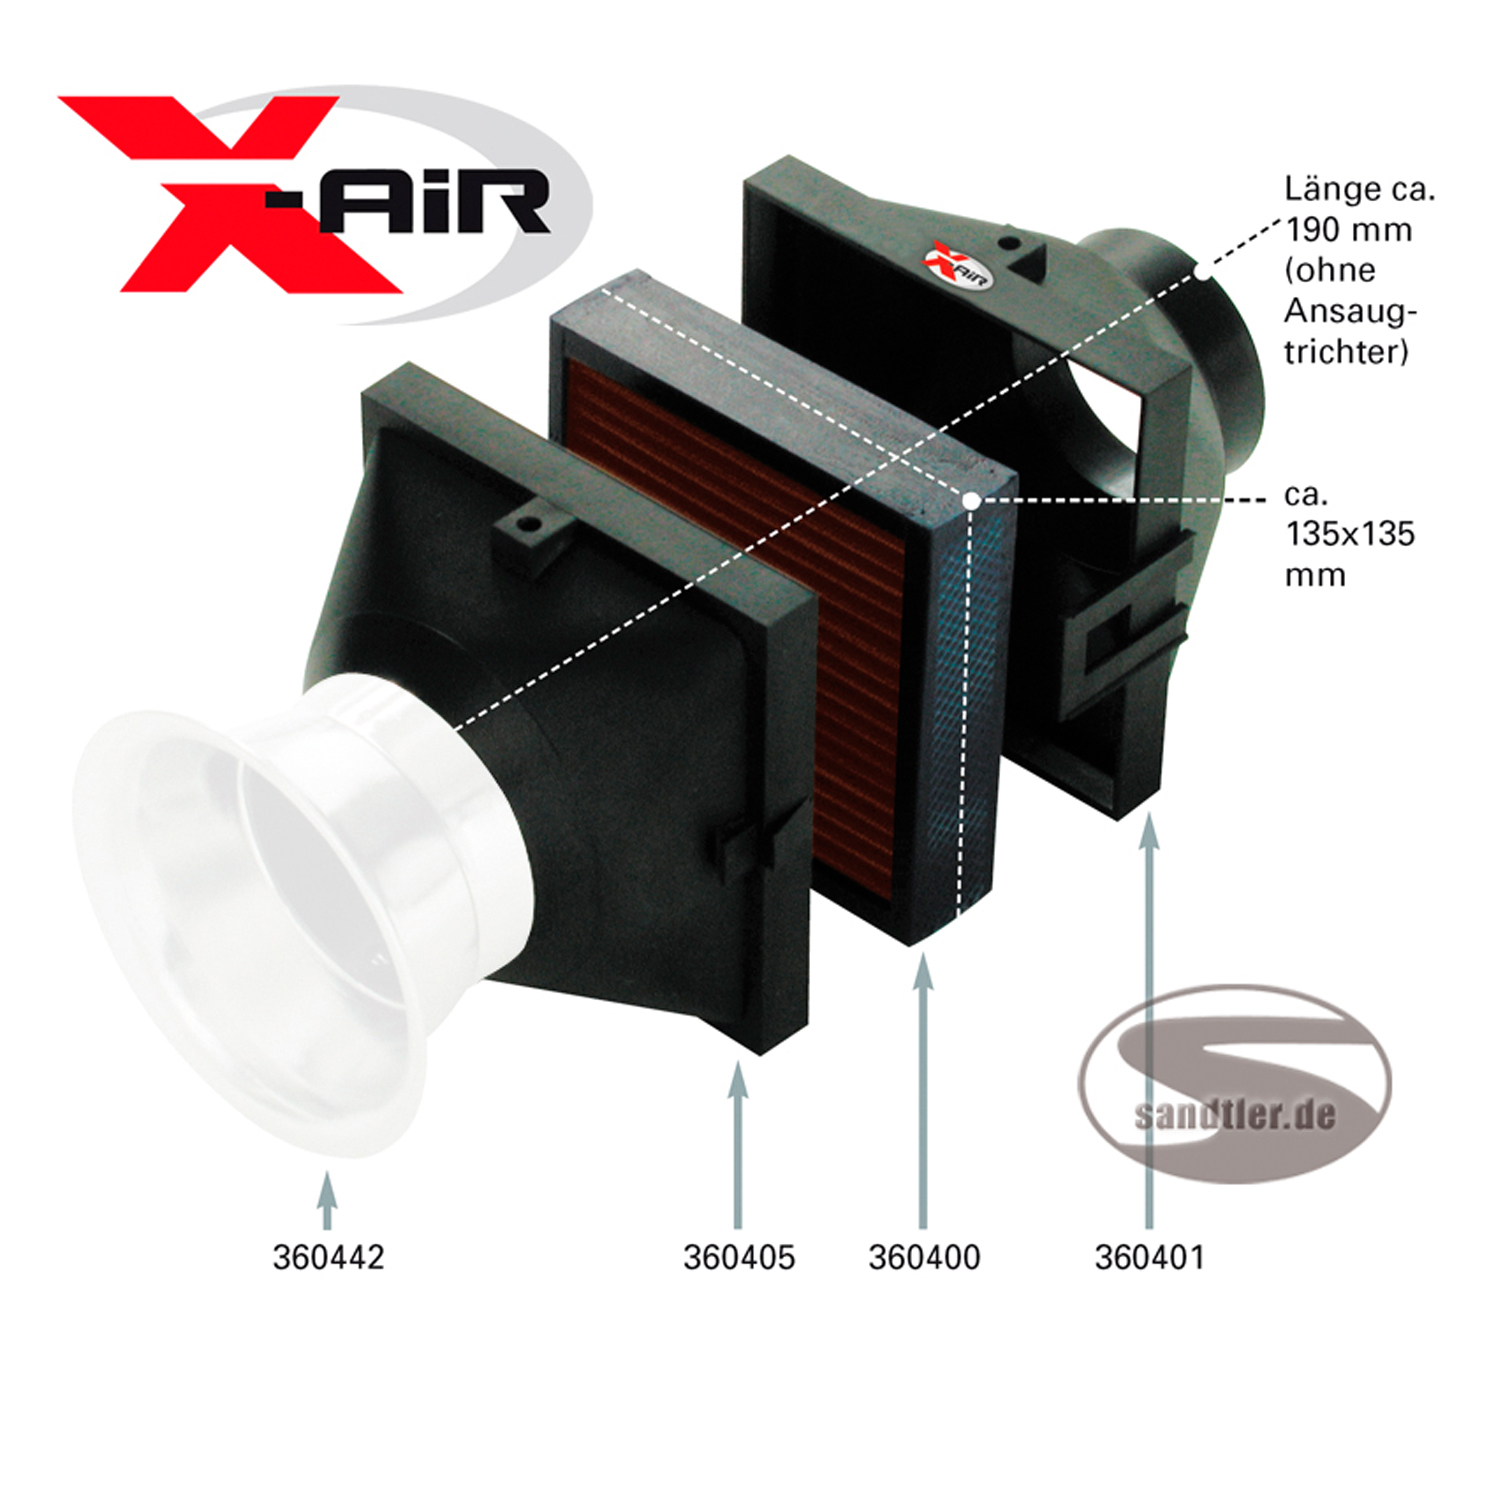 X-Air Universell kombinierbares B2 Filtergehäuse